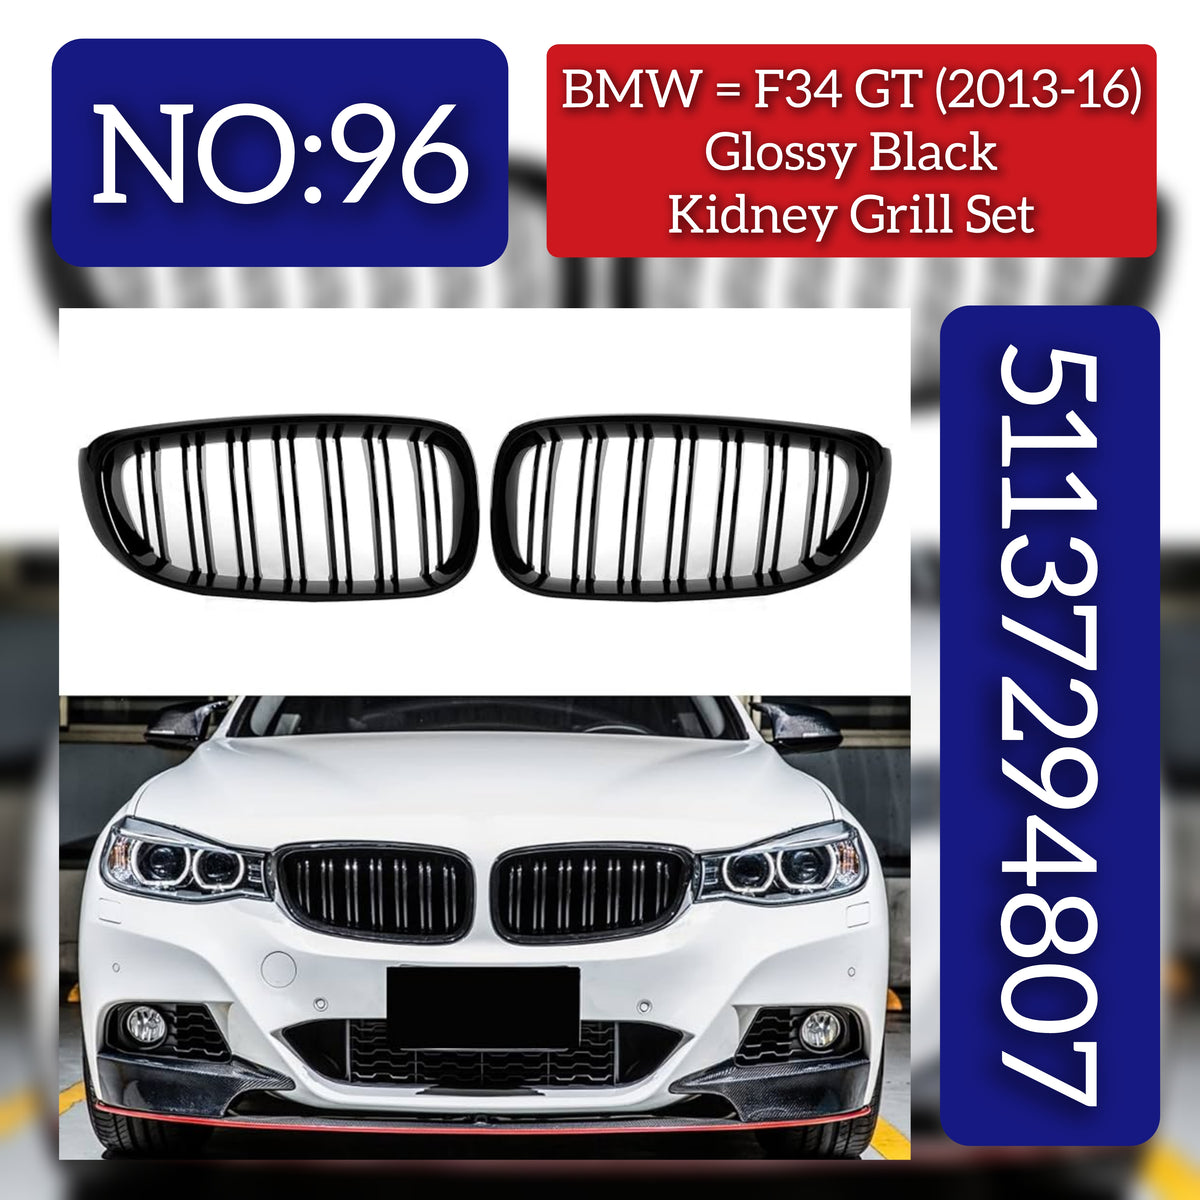 BMW = F34 GT (2013-16) Glossy Black Kidney Grill Set 51137294807 Tag 96